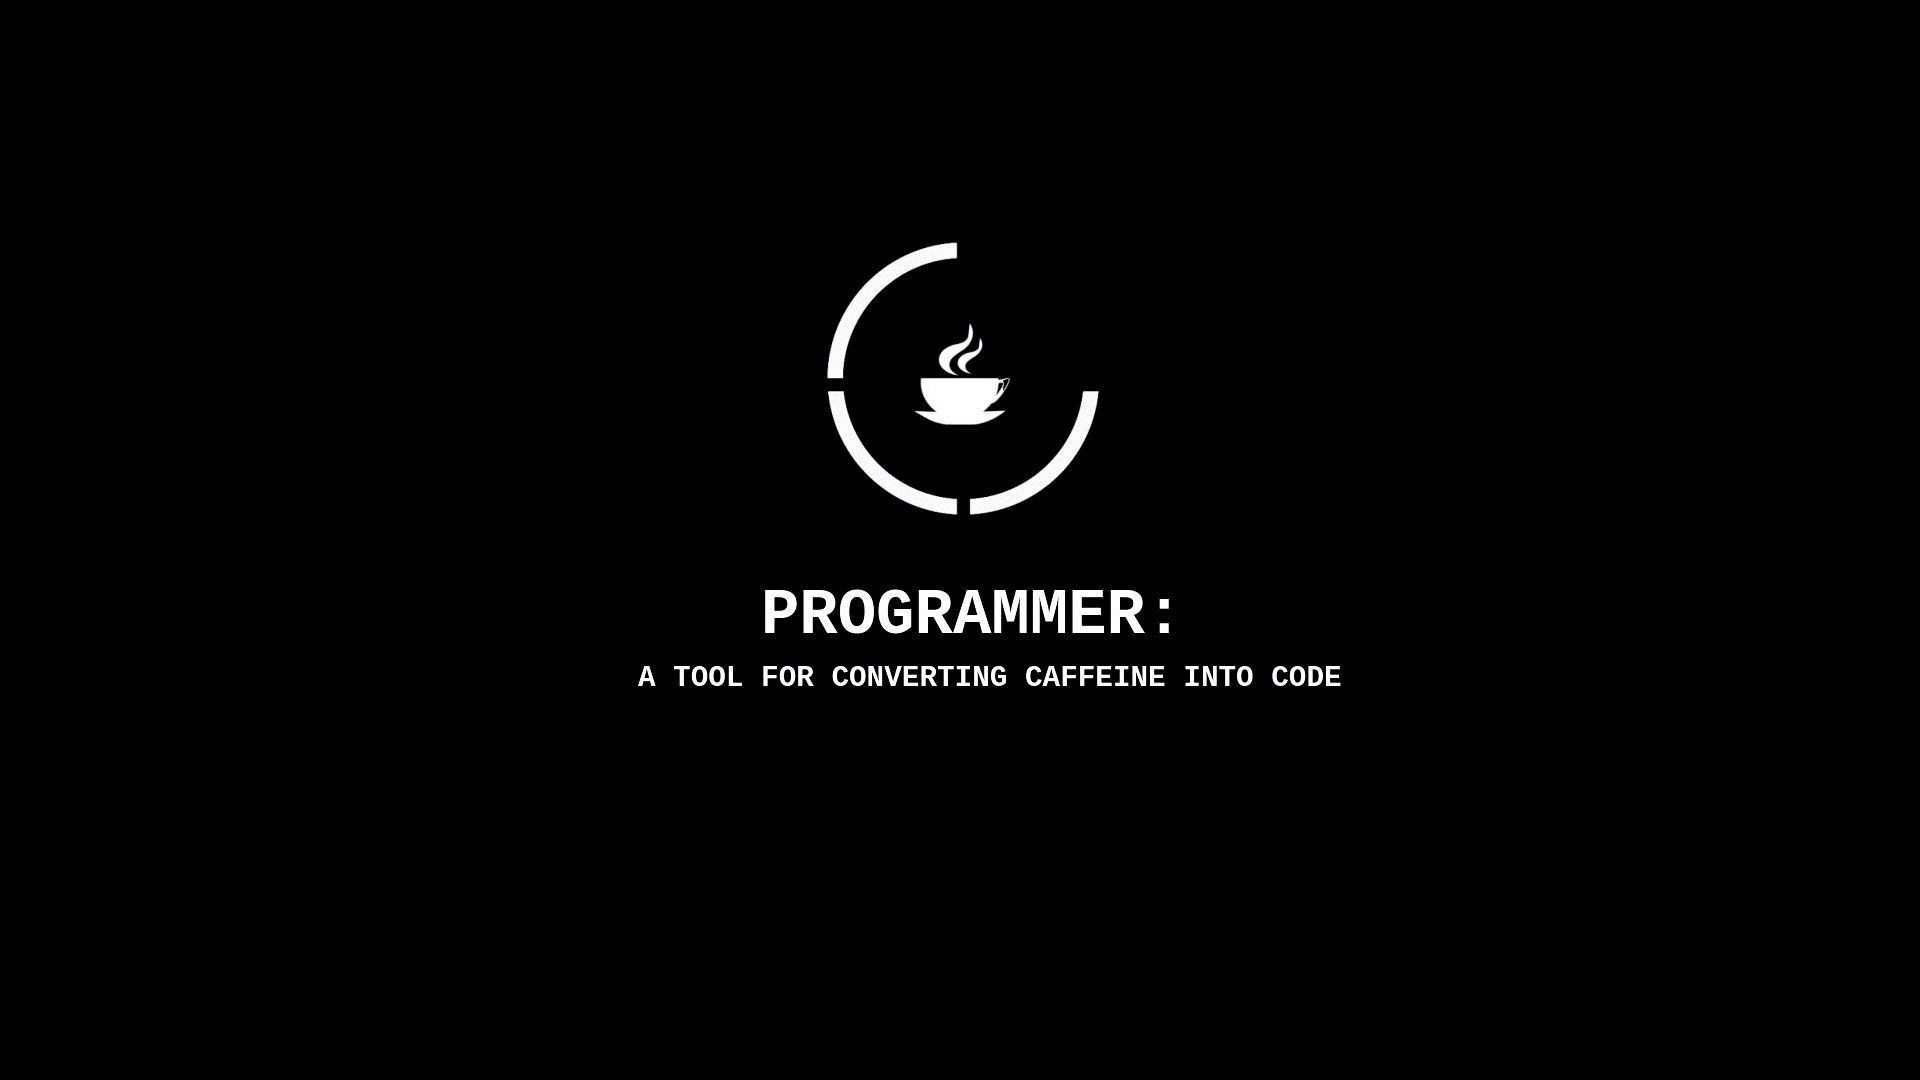 Programming is terrible